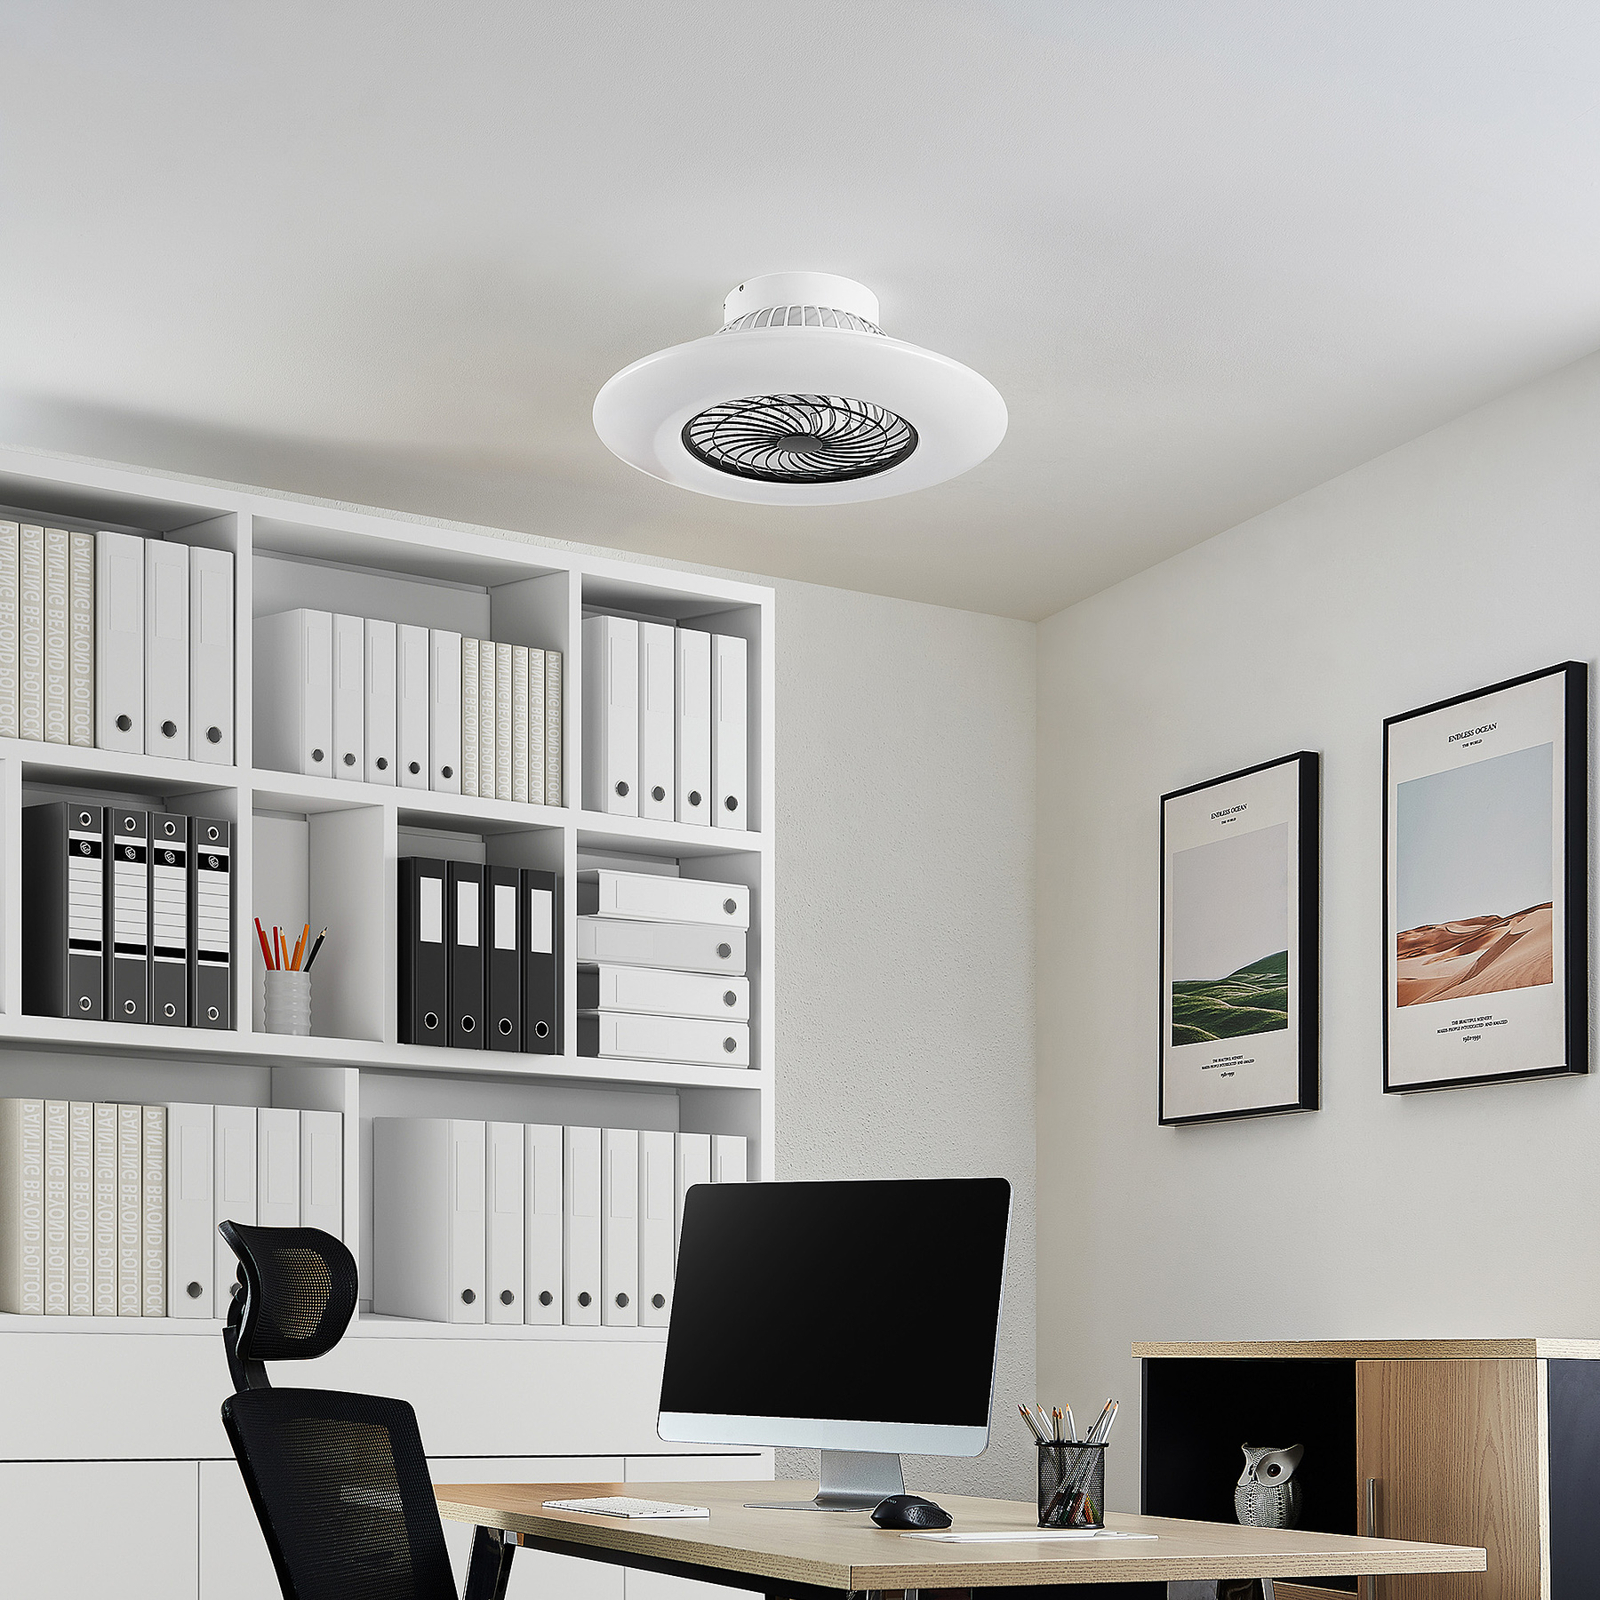 Starluna Arnick LED ceiling fan, black